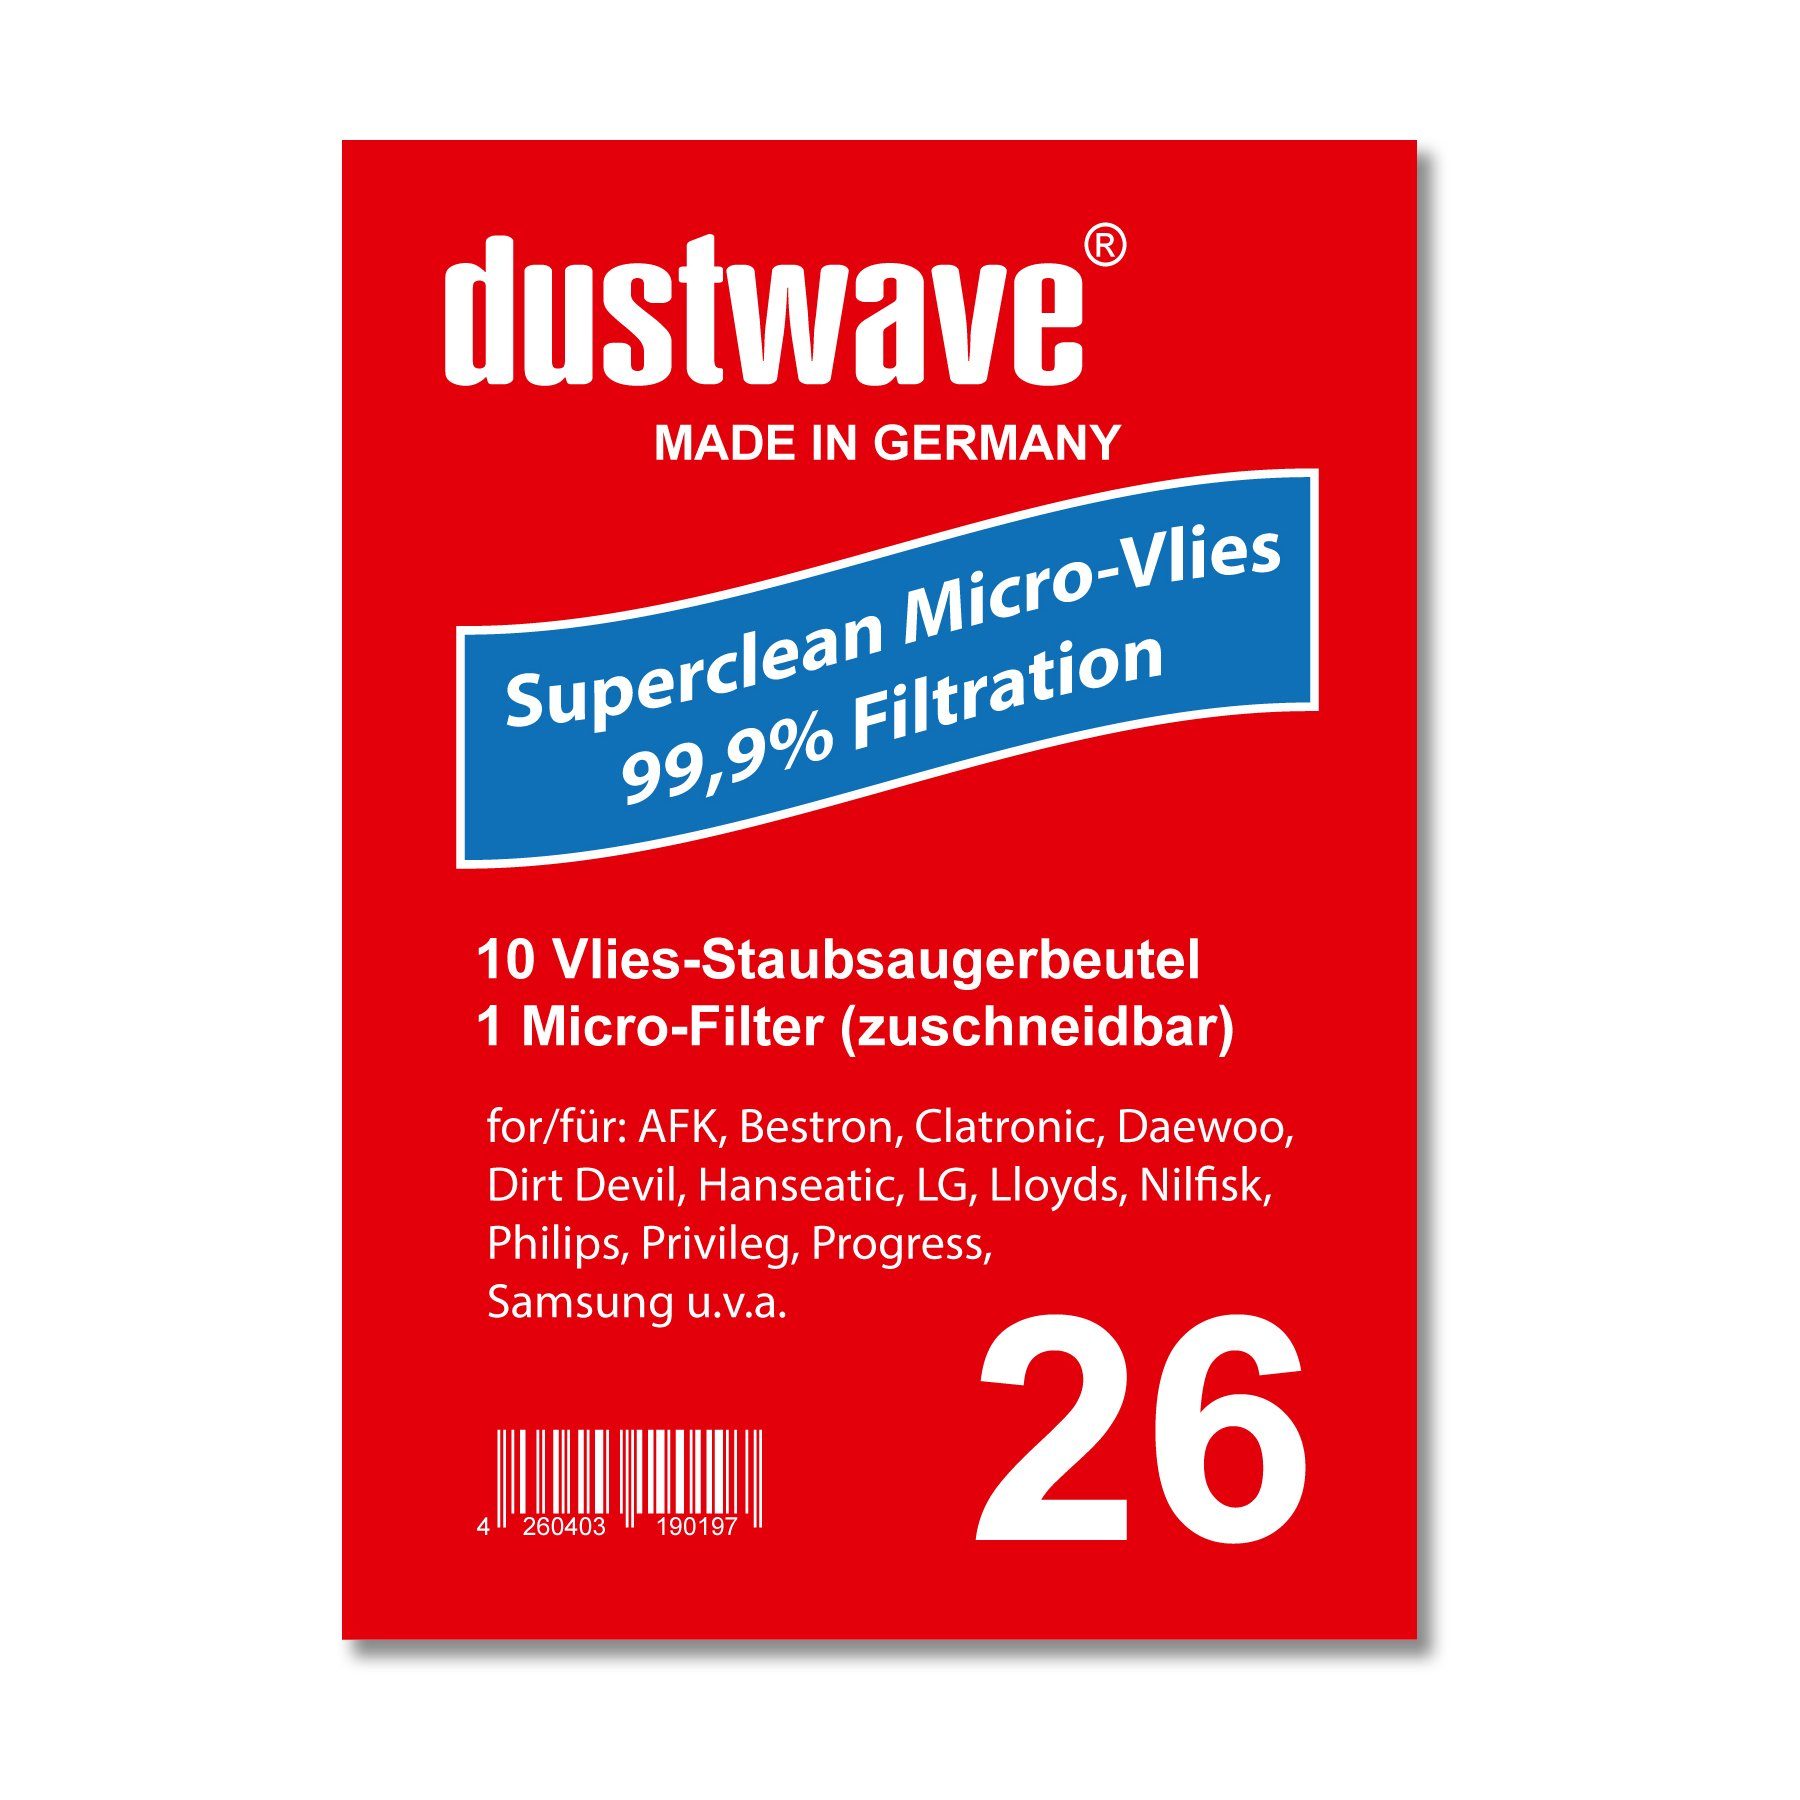 Standard passend QU Dustwave Hepa-Filter zuschneidbar) QU 1 Adix Adix - Sparpack, (ca. Staubsaugerbeutel 10 15x15cm Sparpack, 340 340, St., Staubsaugerbeutel 10 - + für